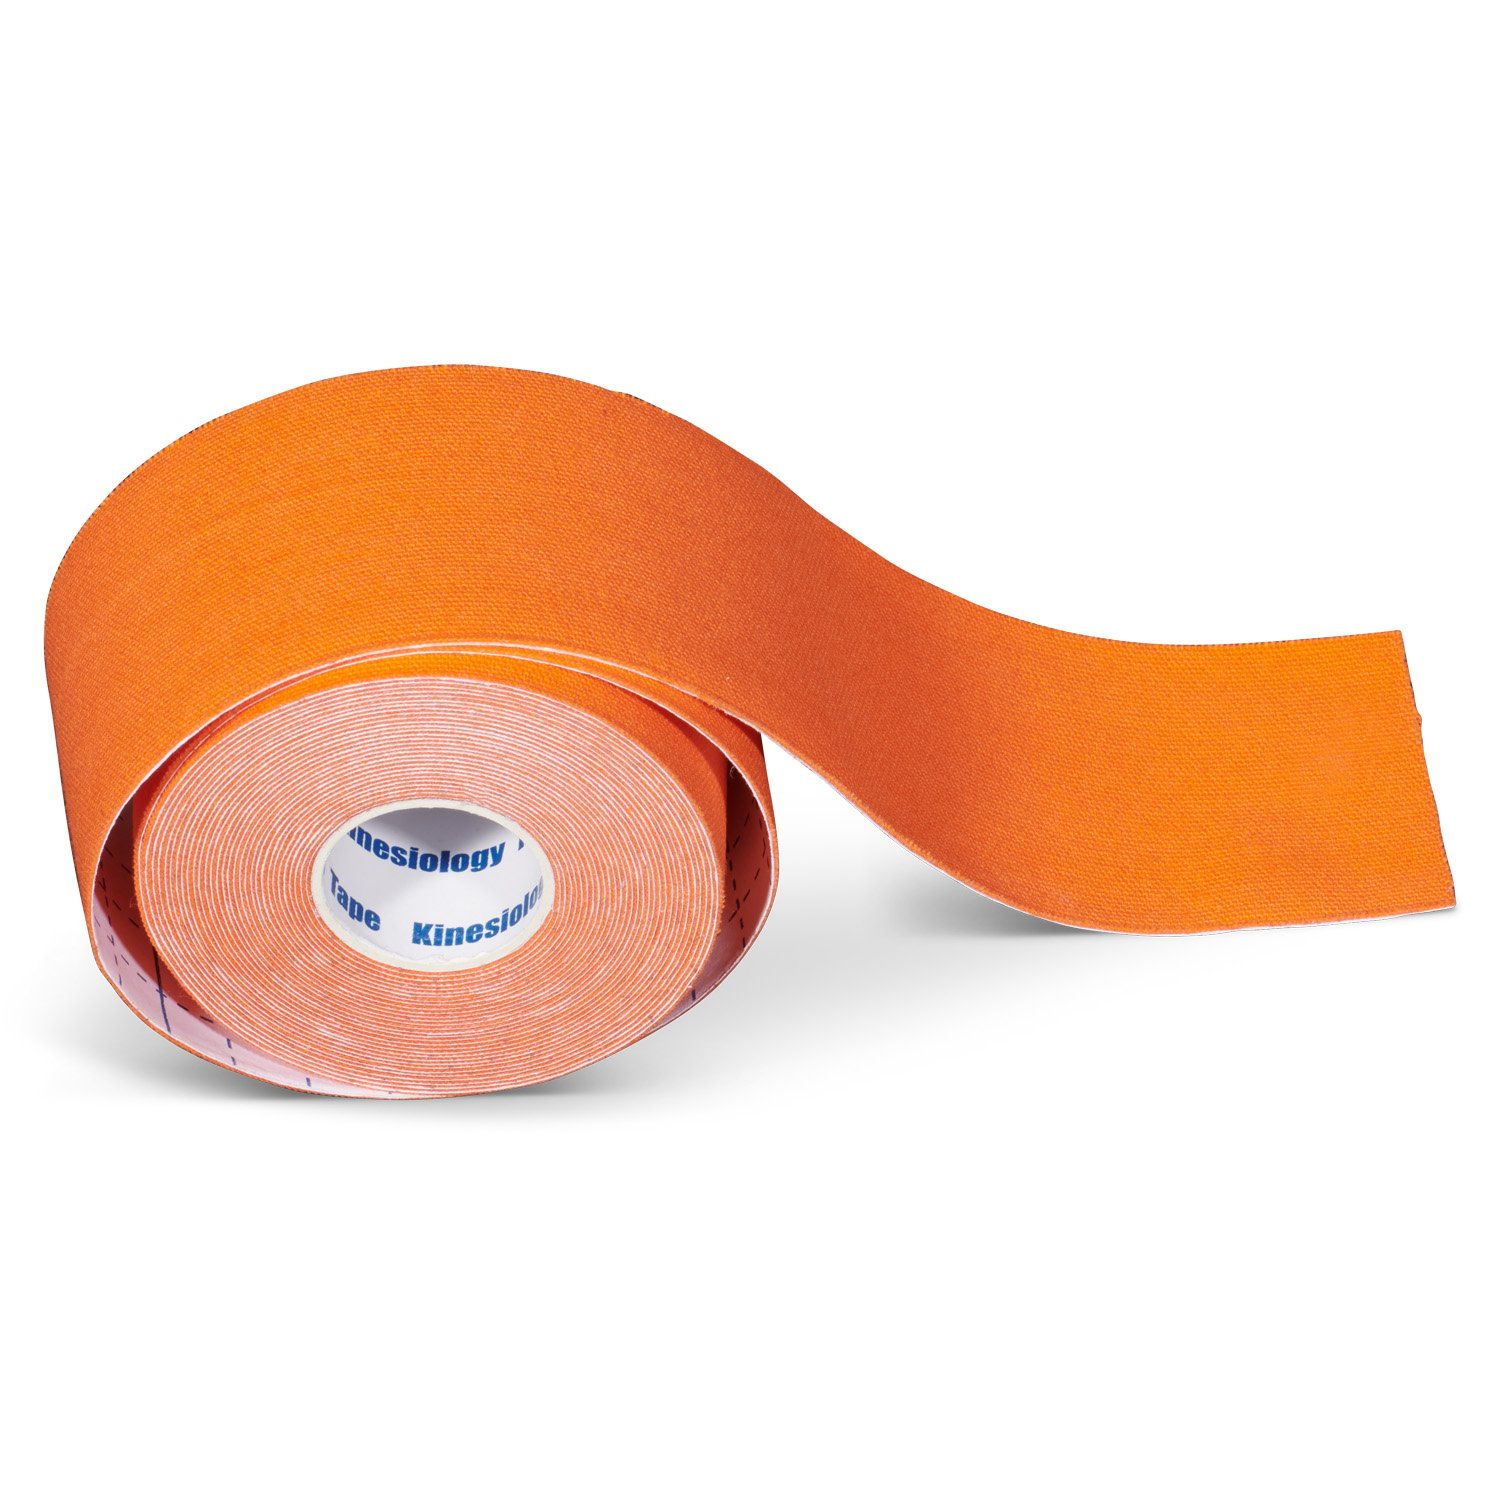 Kinesiology tape 6 rolls plus 2 rolls for free orange